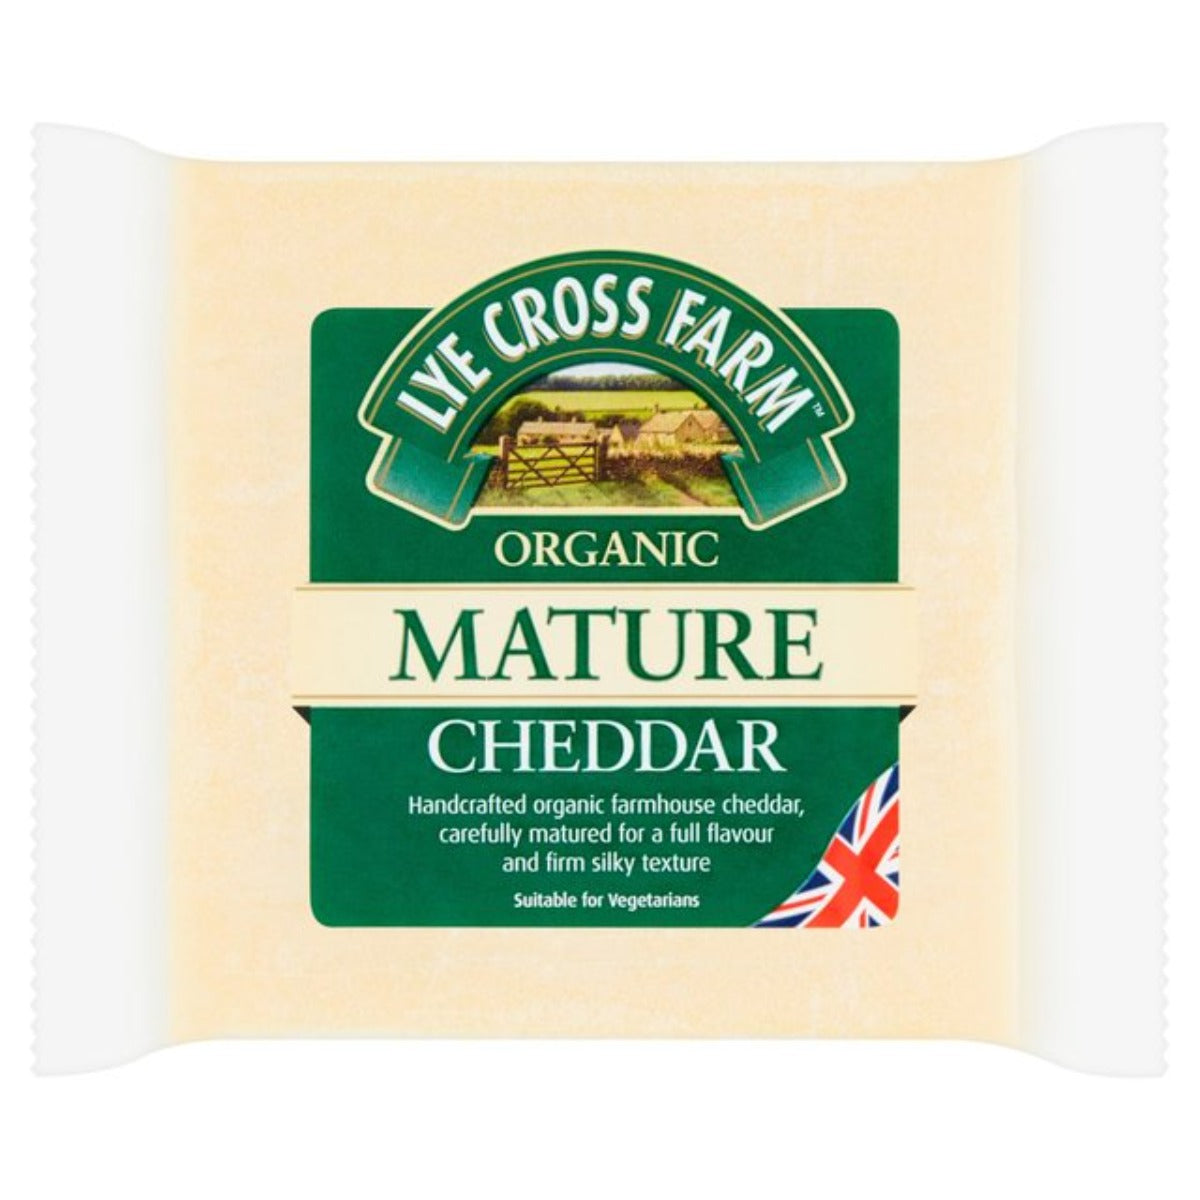 Lye Cross Farm Organic Mature Cheddar 245g